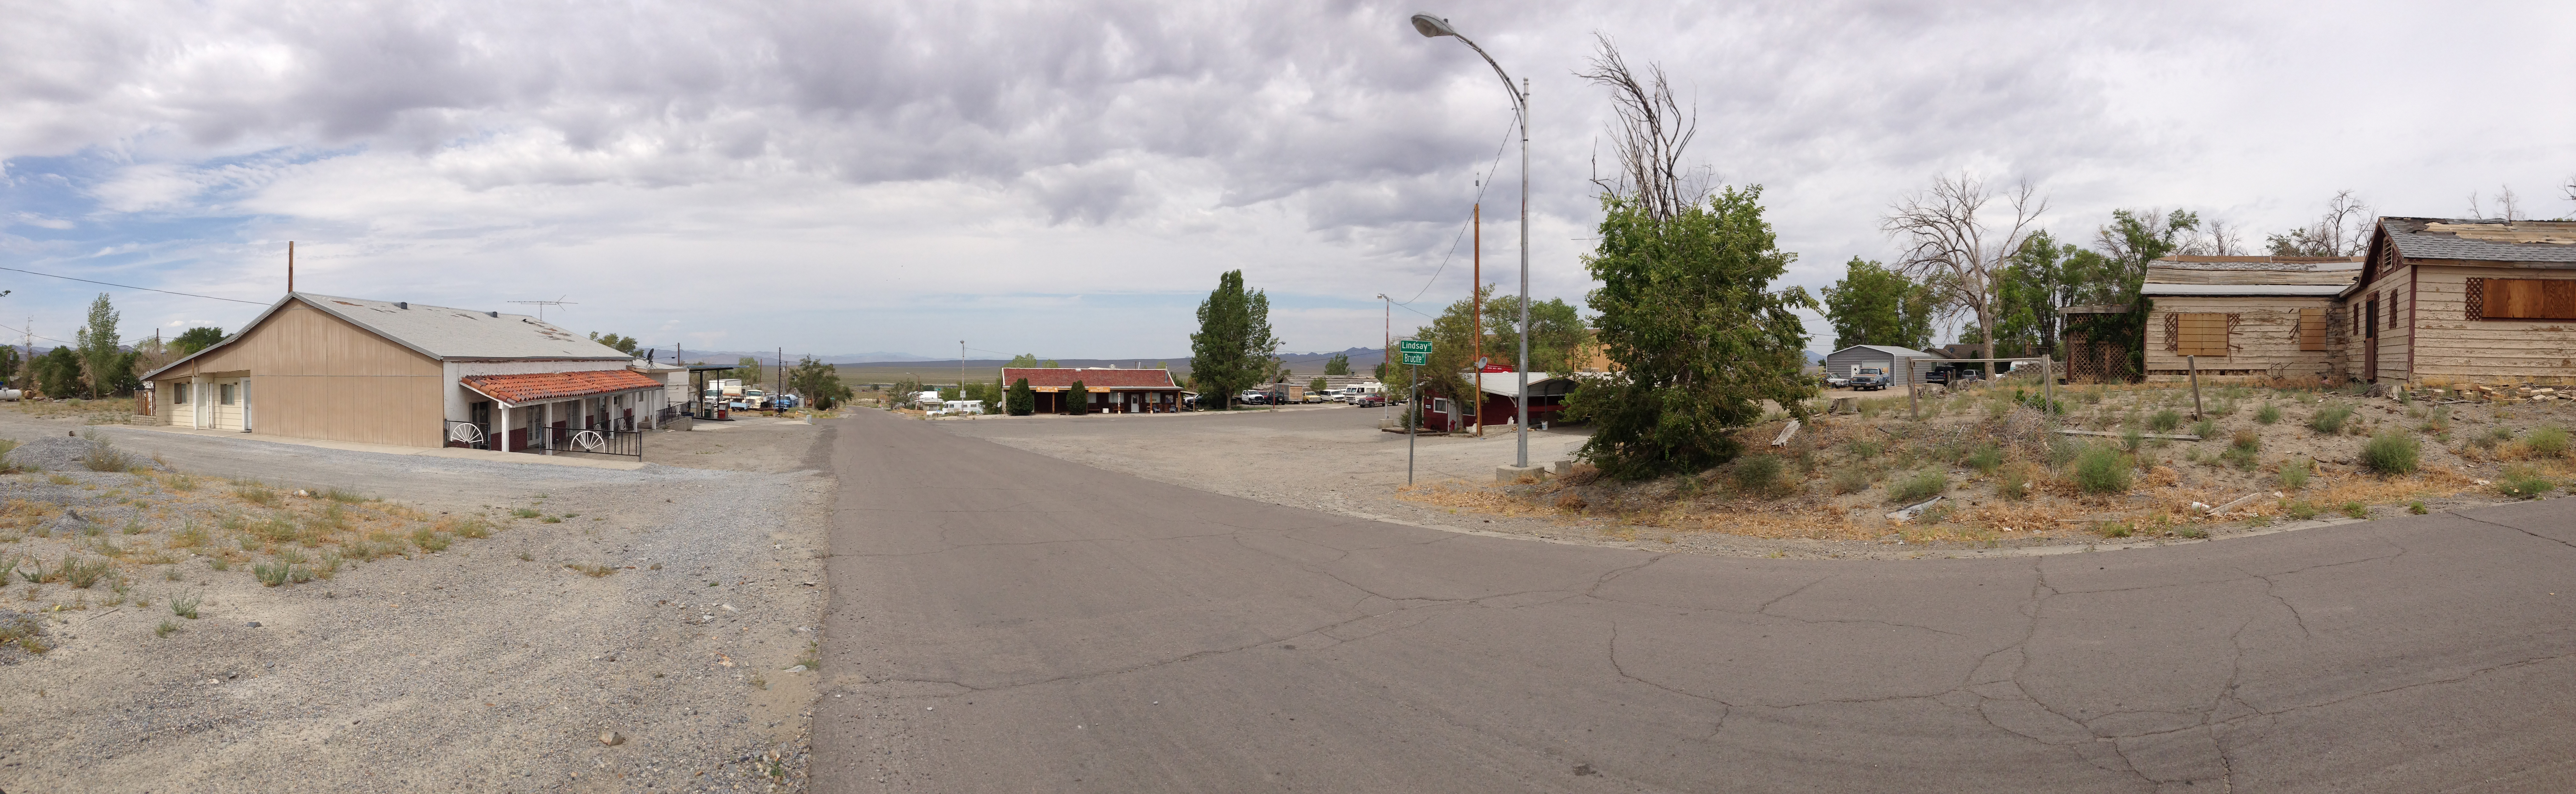 2014-07-28 10 20 40 Panorama of central Gabbs, Nevada.JPG